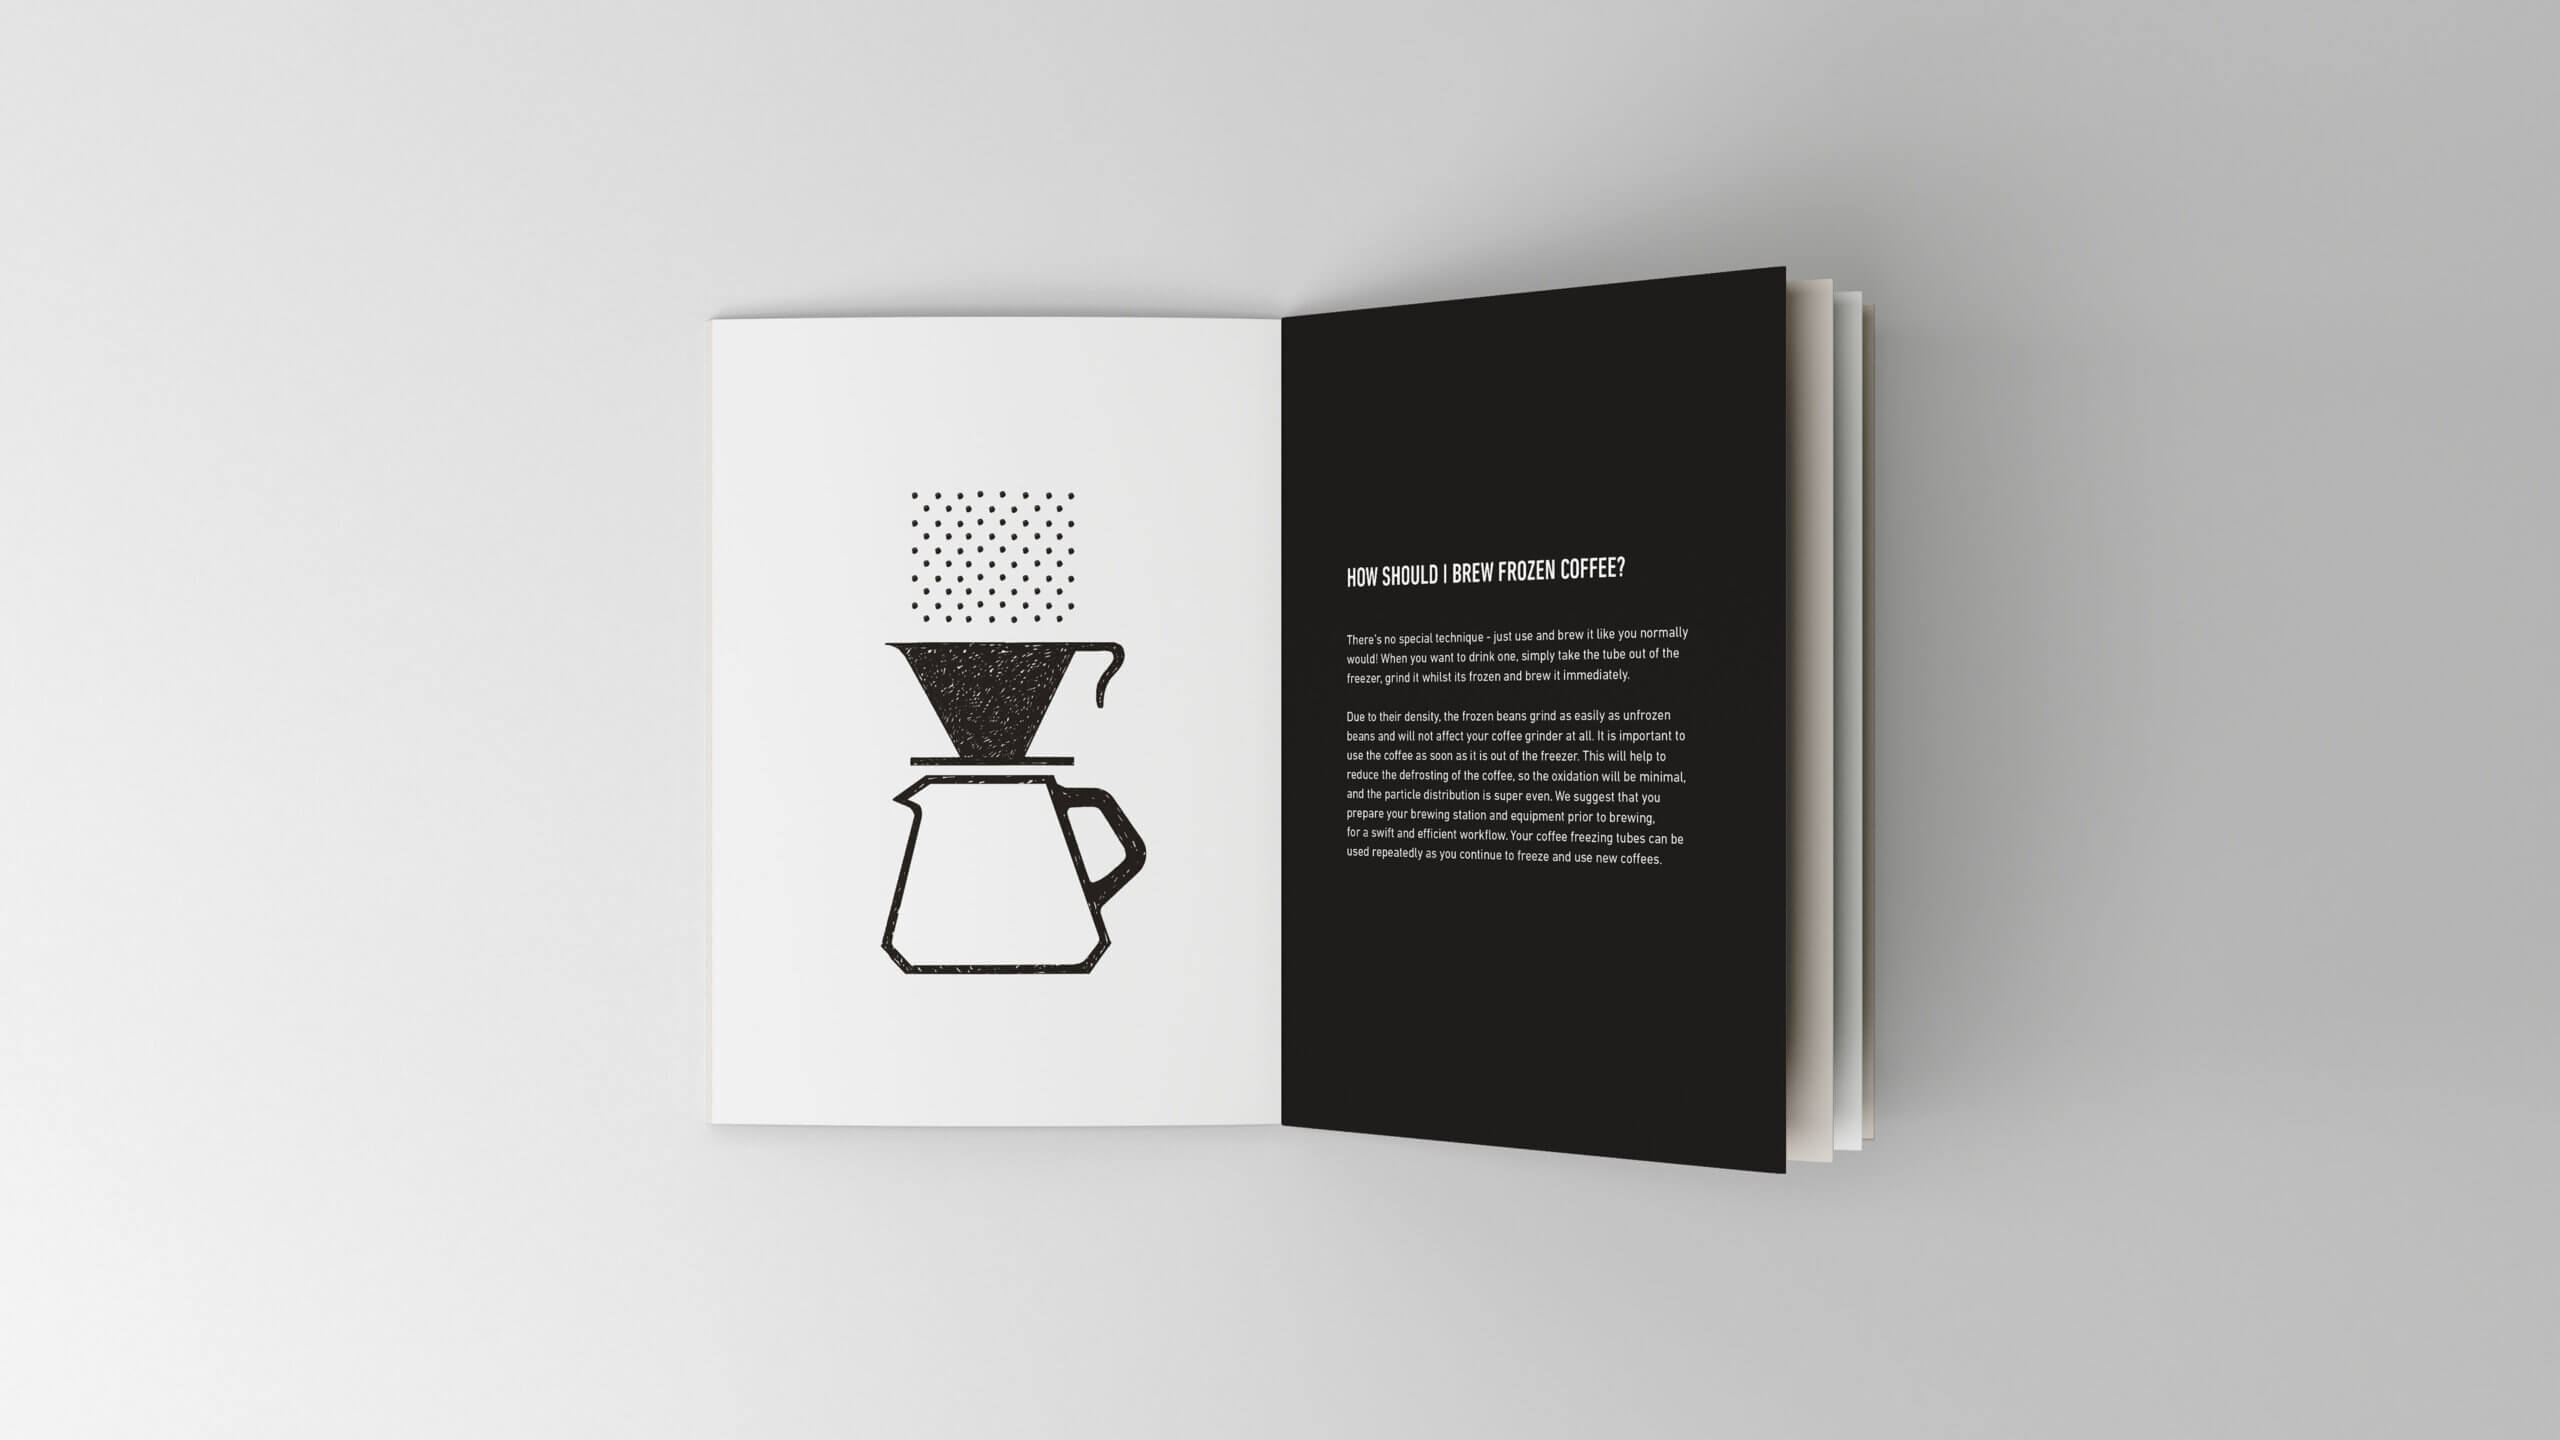 Packaging and Editorial Design: Röststätte Berlin Frozen Coffee